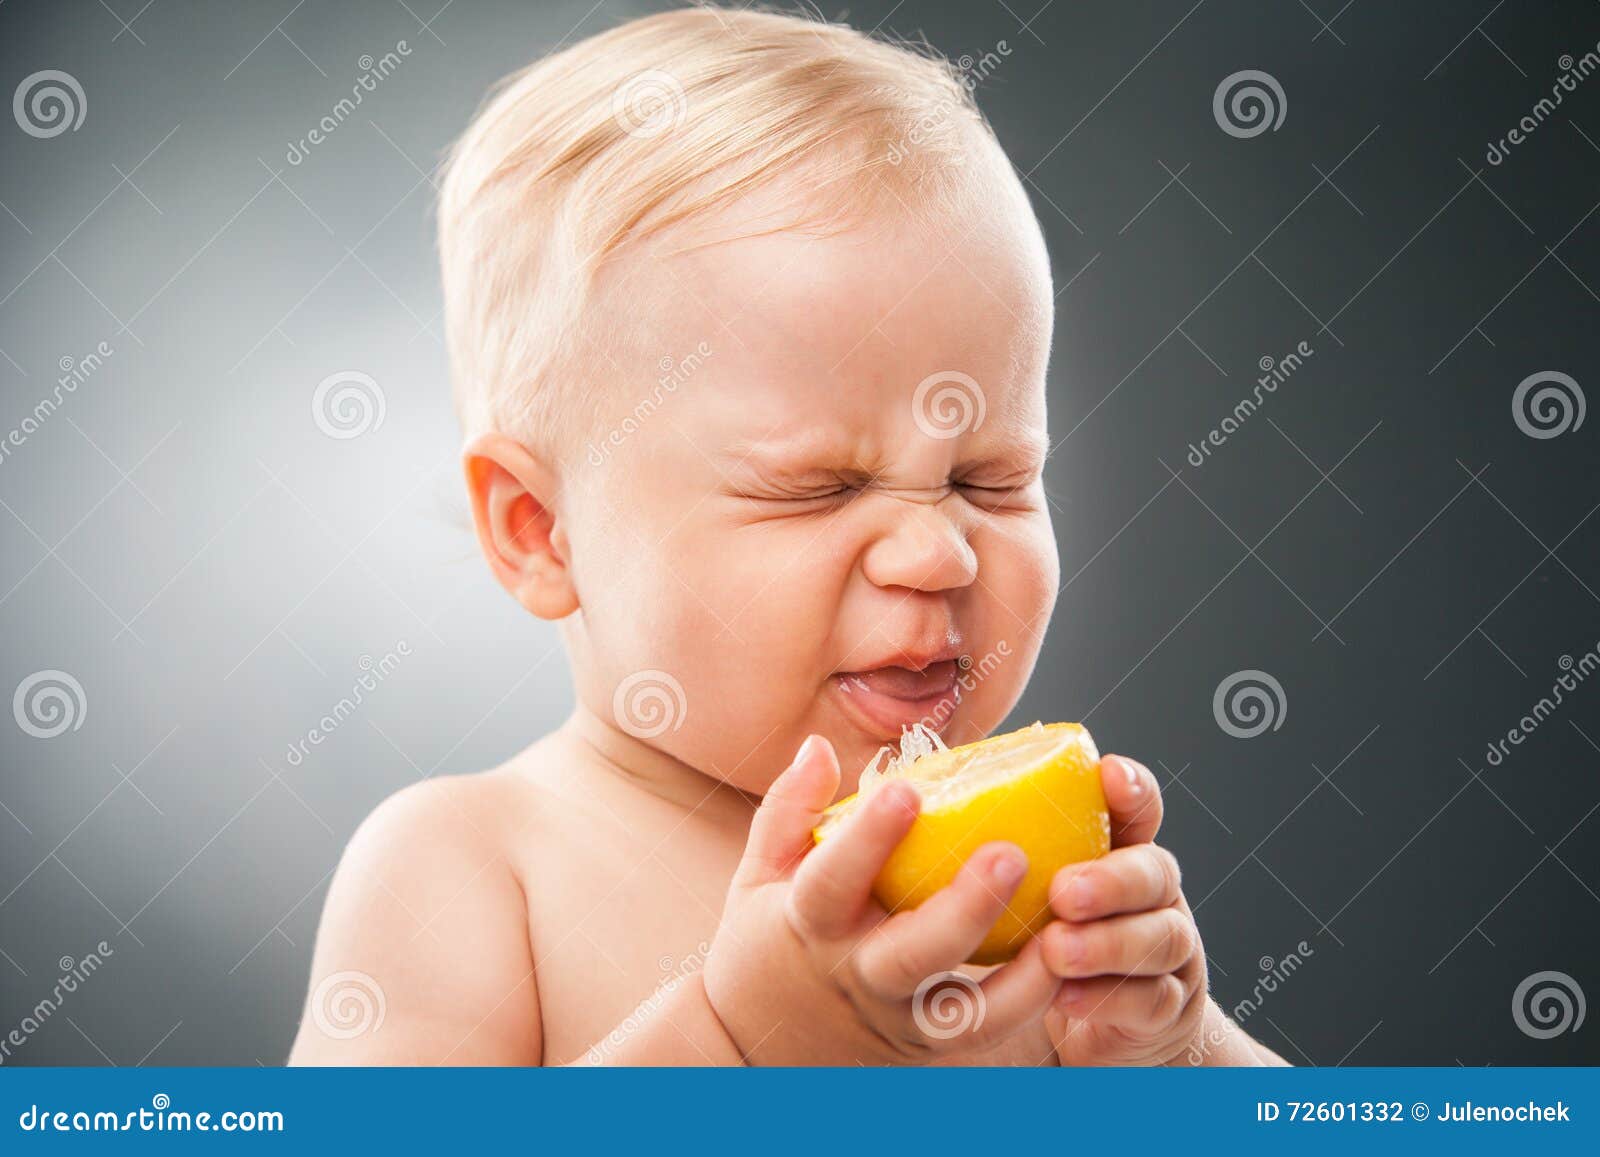 funny baby lemon